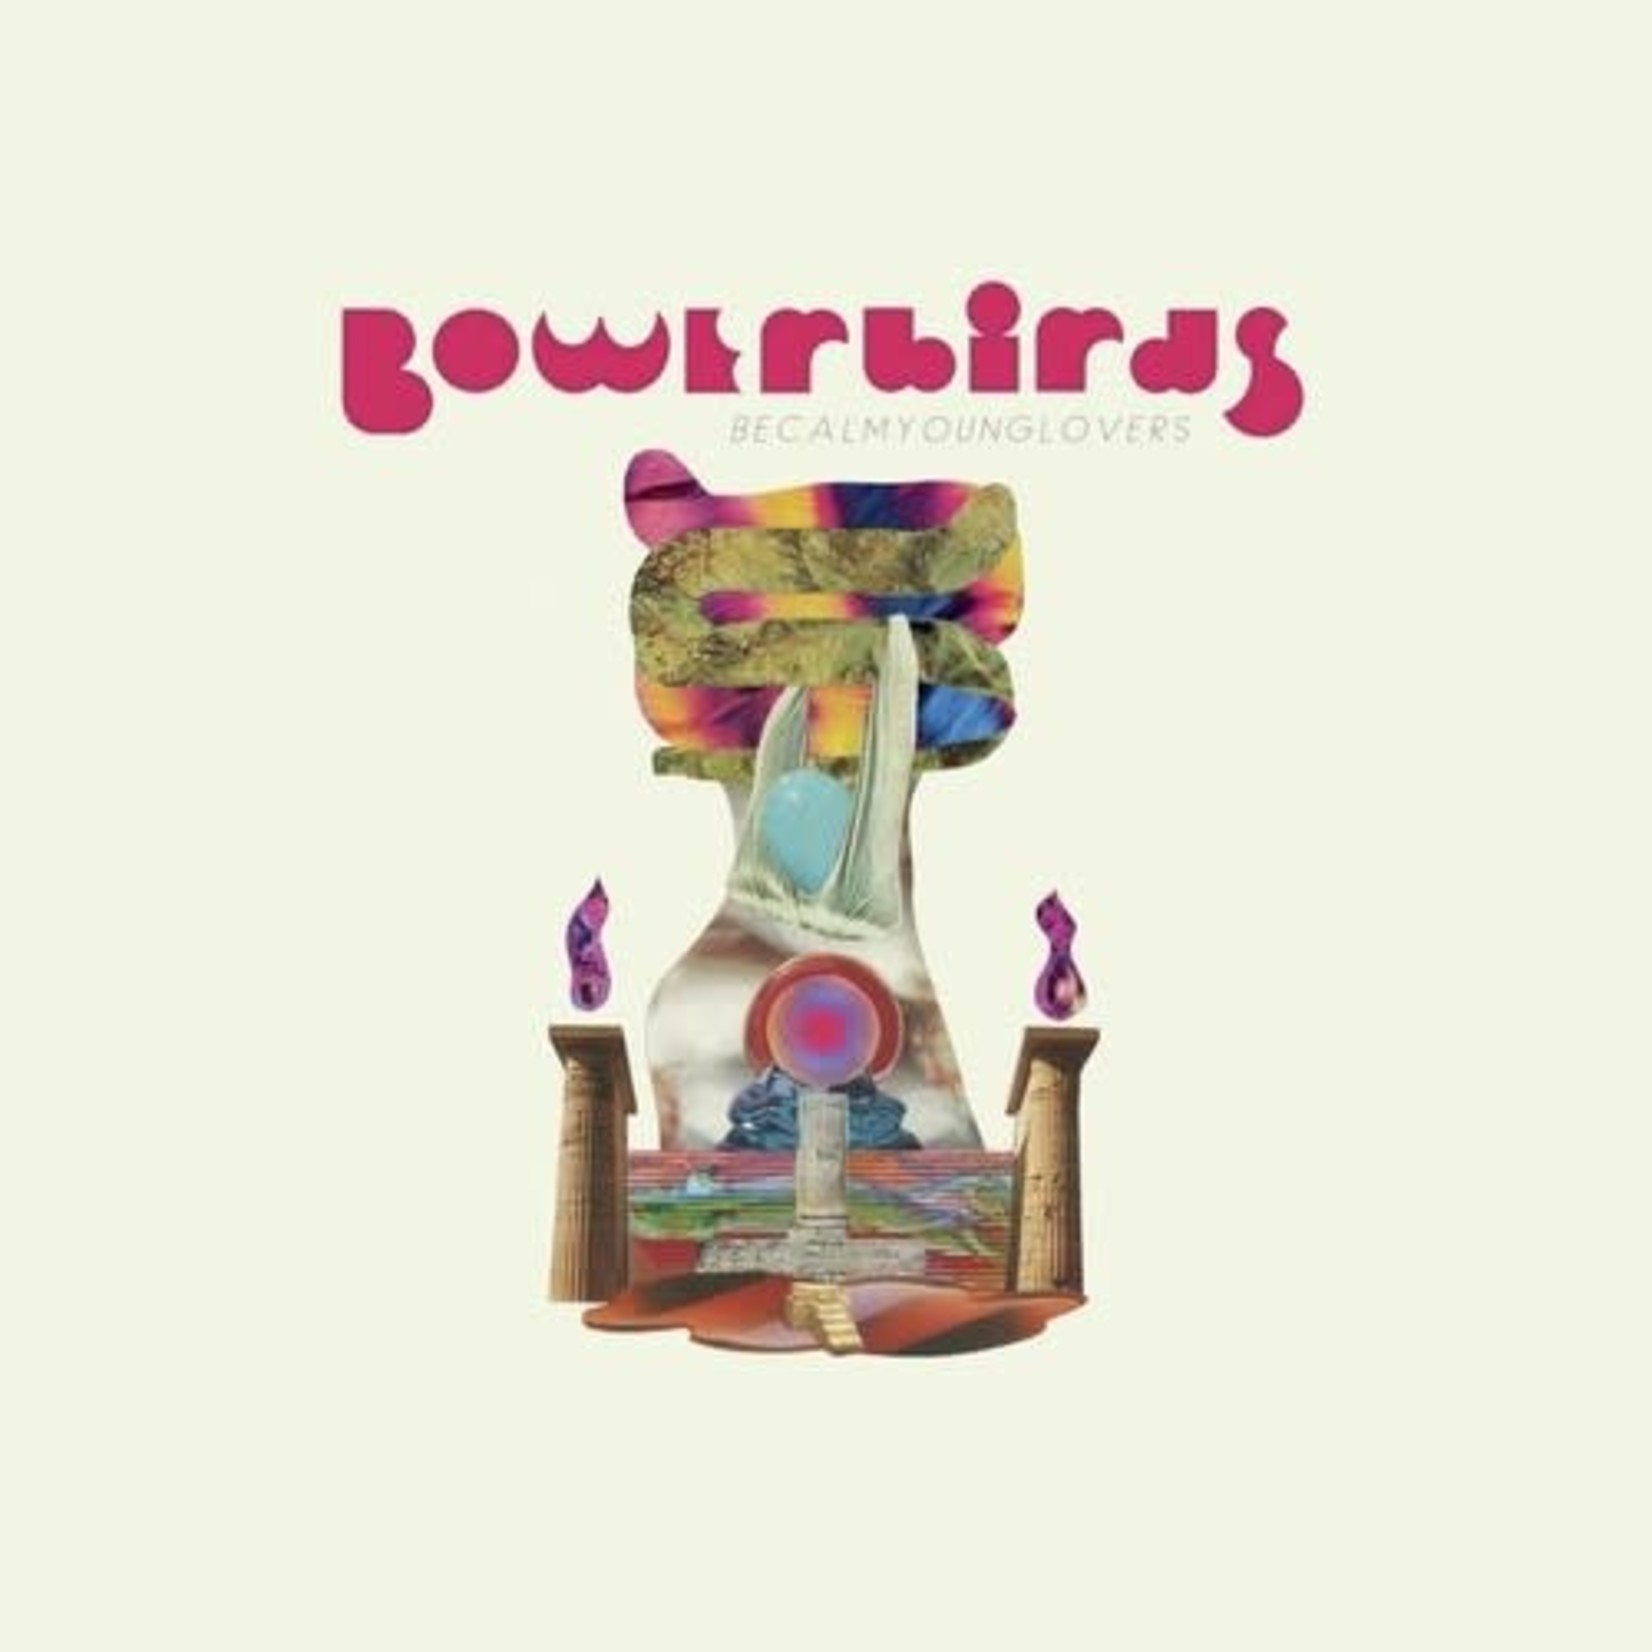 Psychic Hotline Bowerbirds - becalmyounglovers (LP) [Teal]